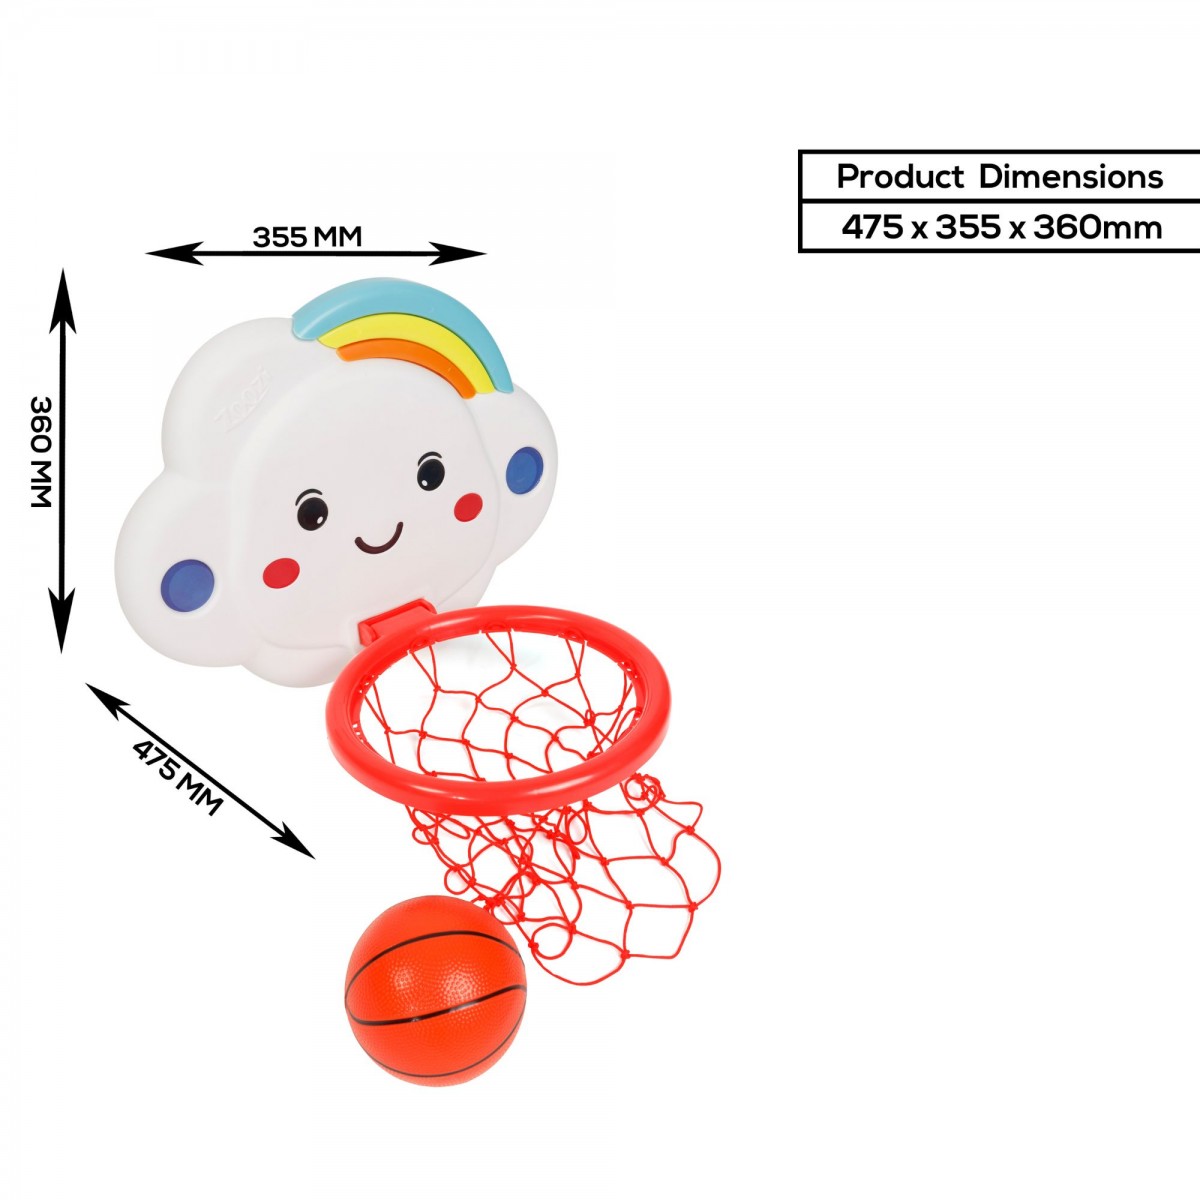 Zoozi Basket Ball Wall Mounted Basketball Hoop Set, Multicolour, Indoor Basketball Hoop for Kids & Adults, 36M+